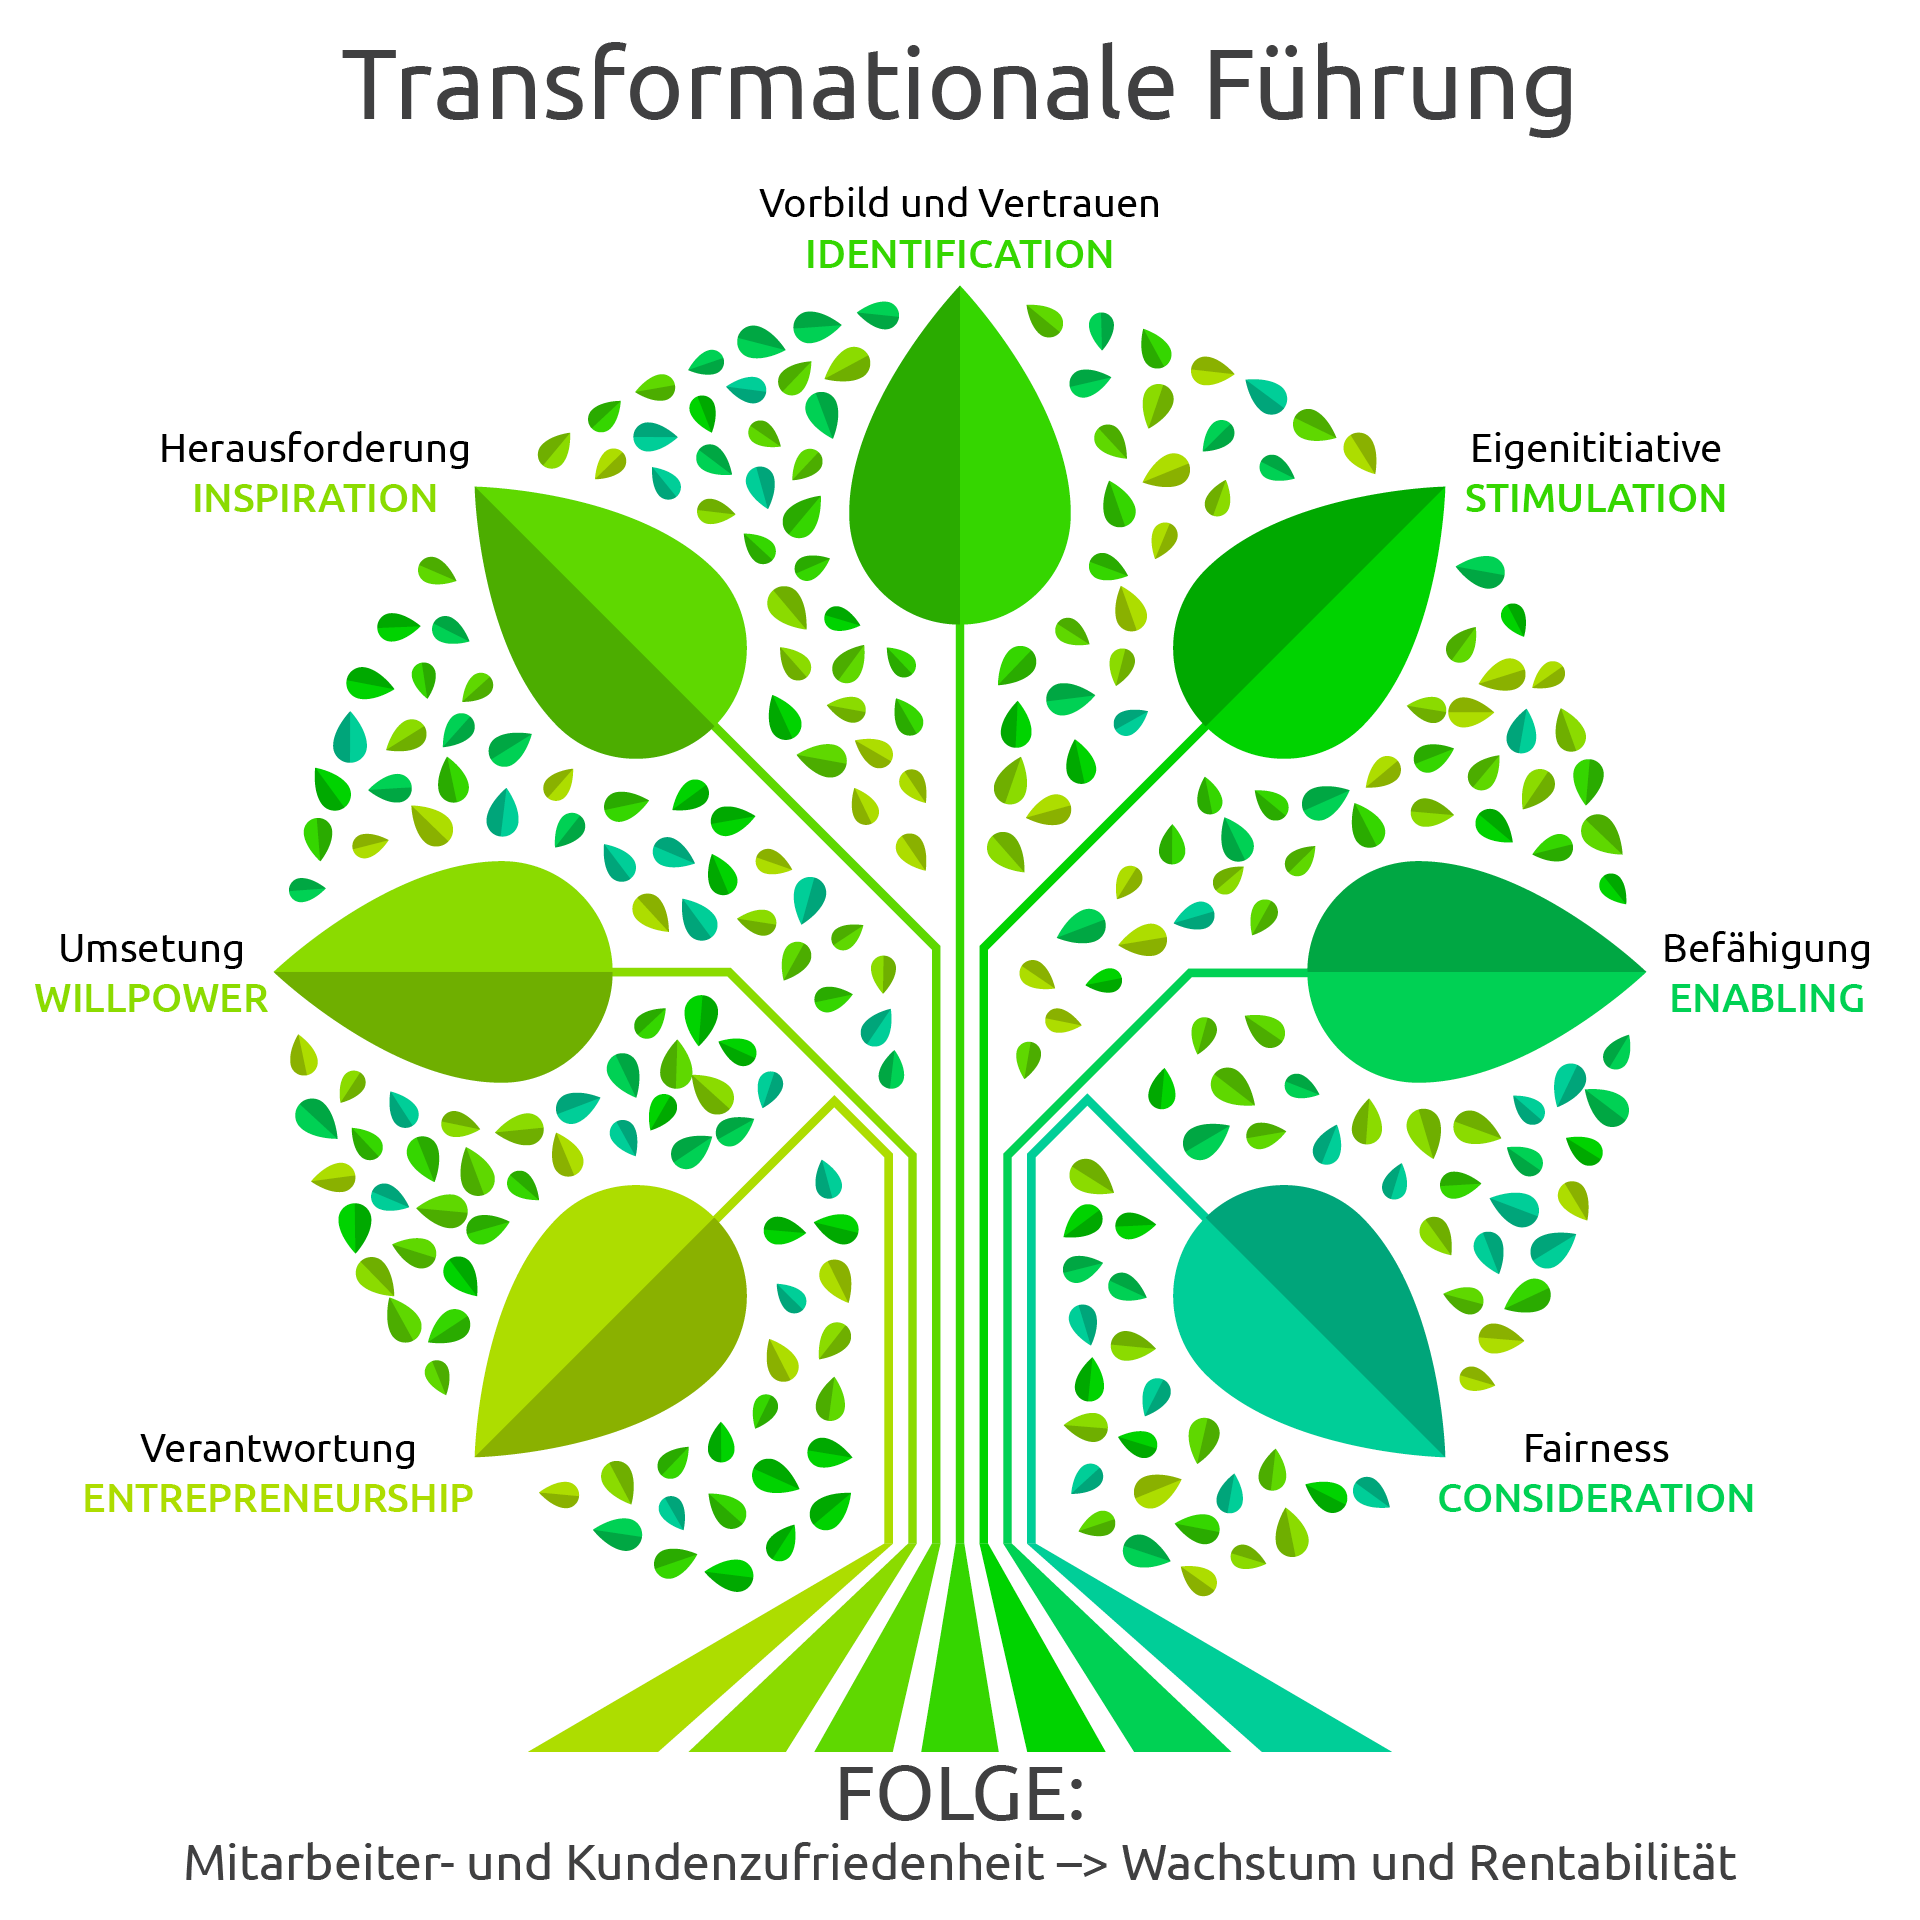 Transformationale Fuehrung